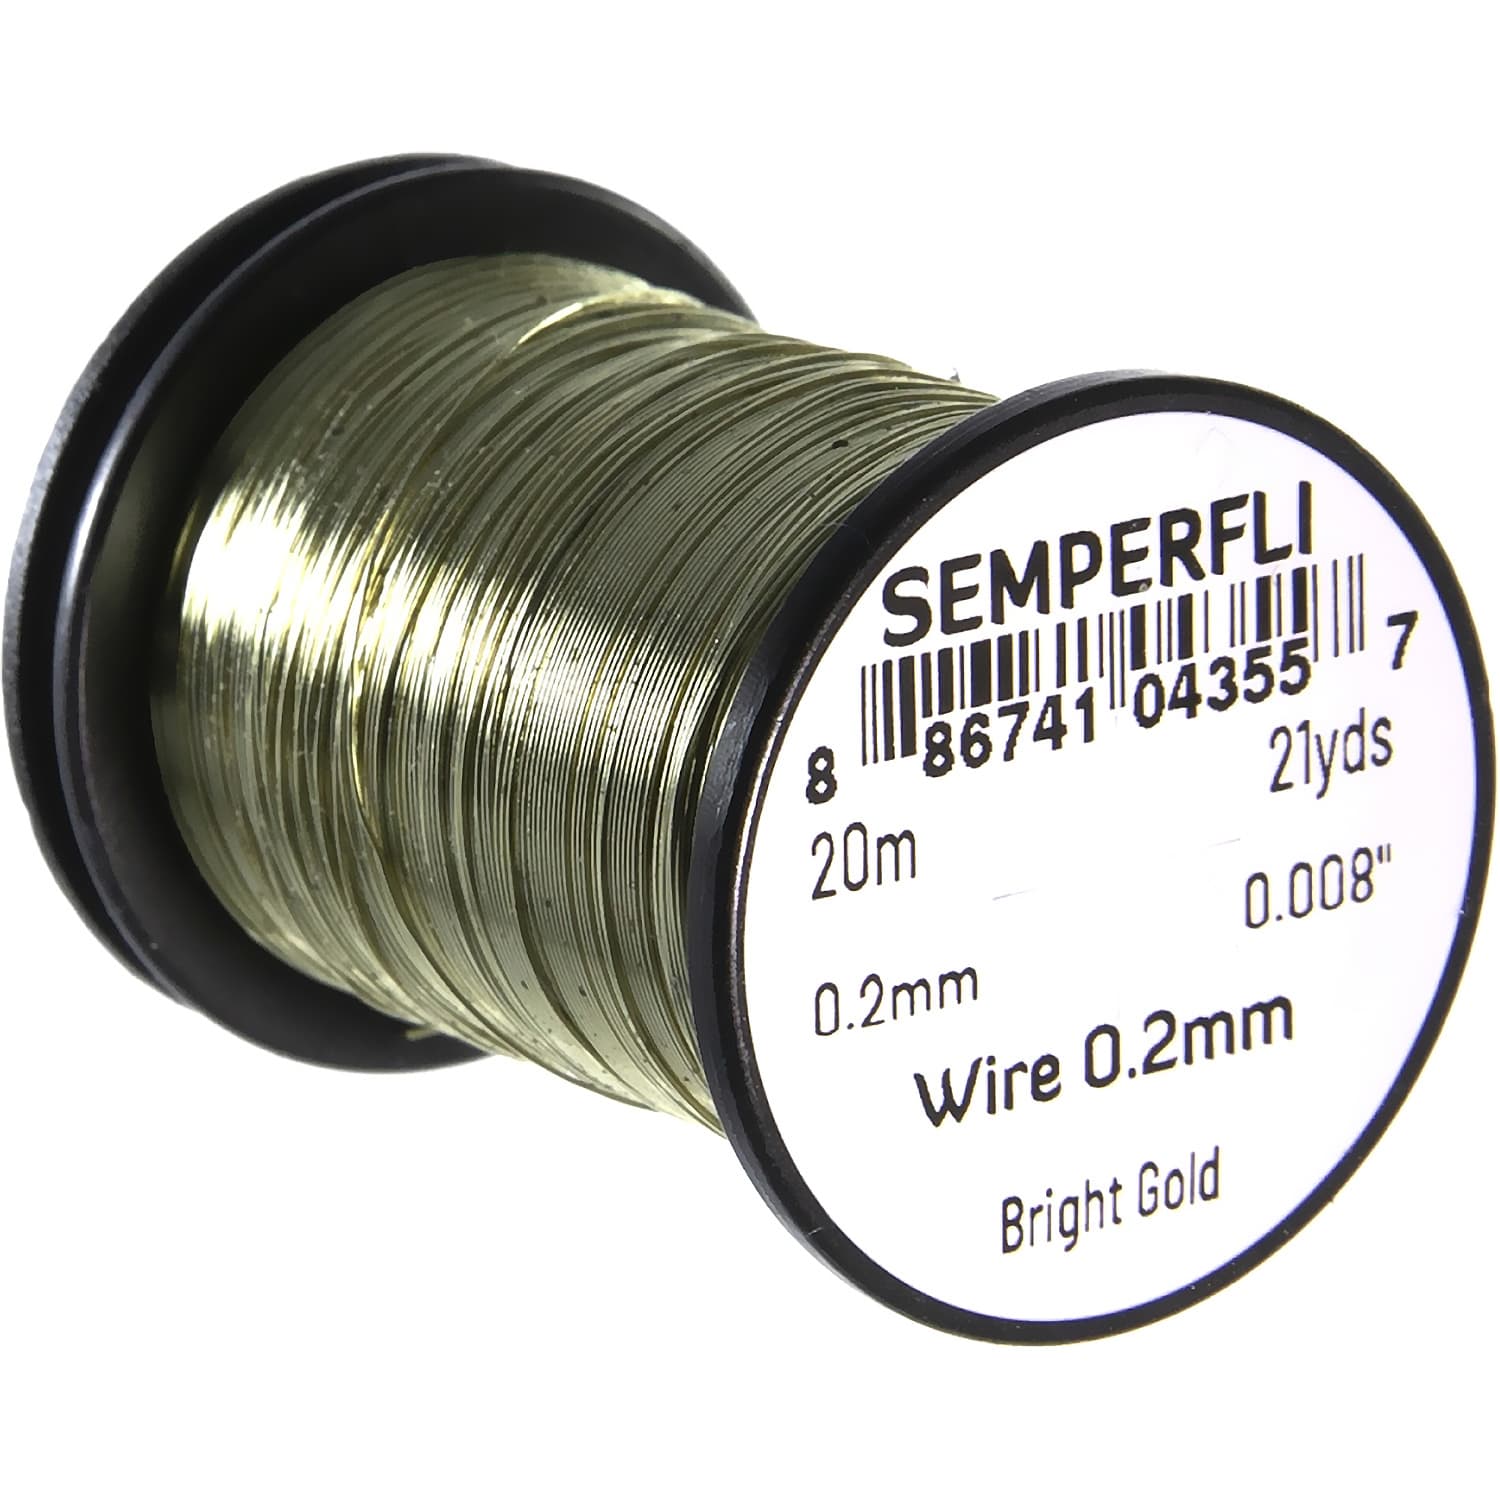 SEMPERFLI Wire 0.2mm bright gold